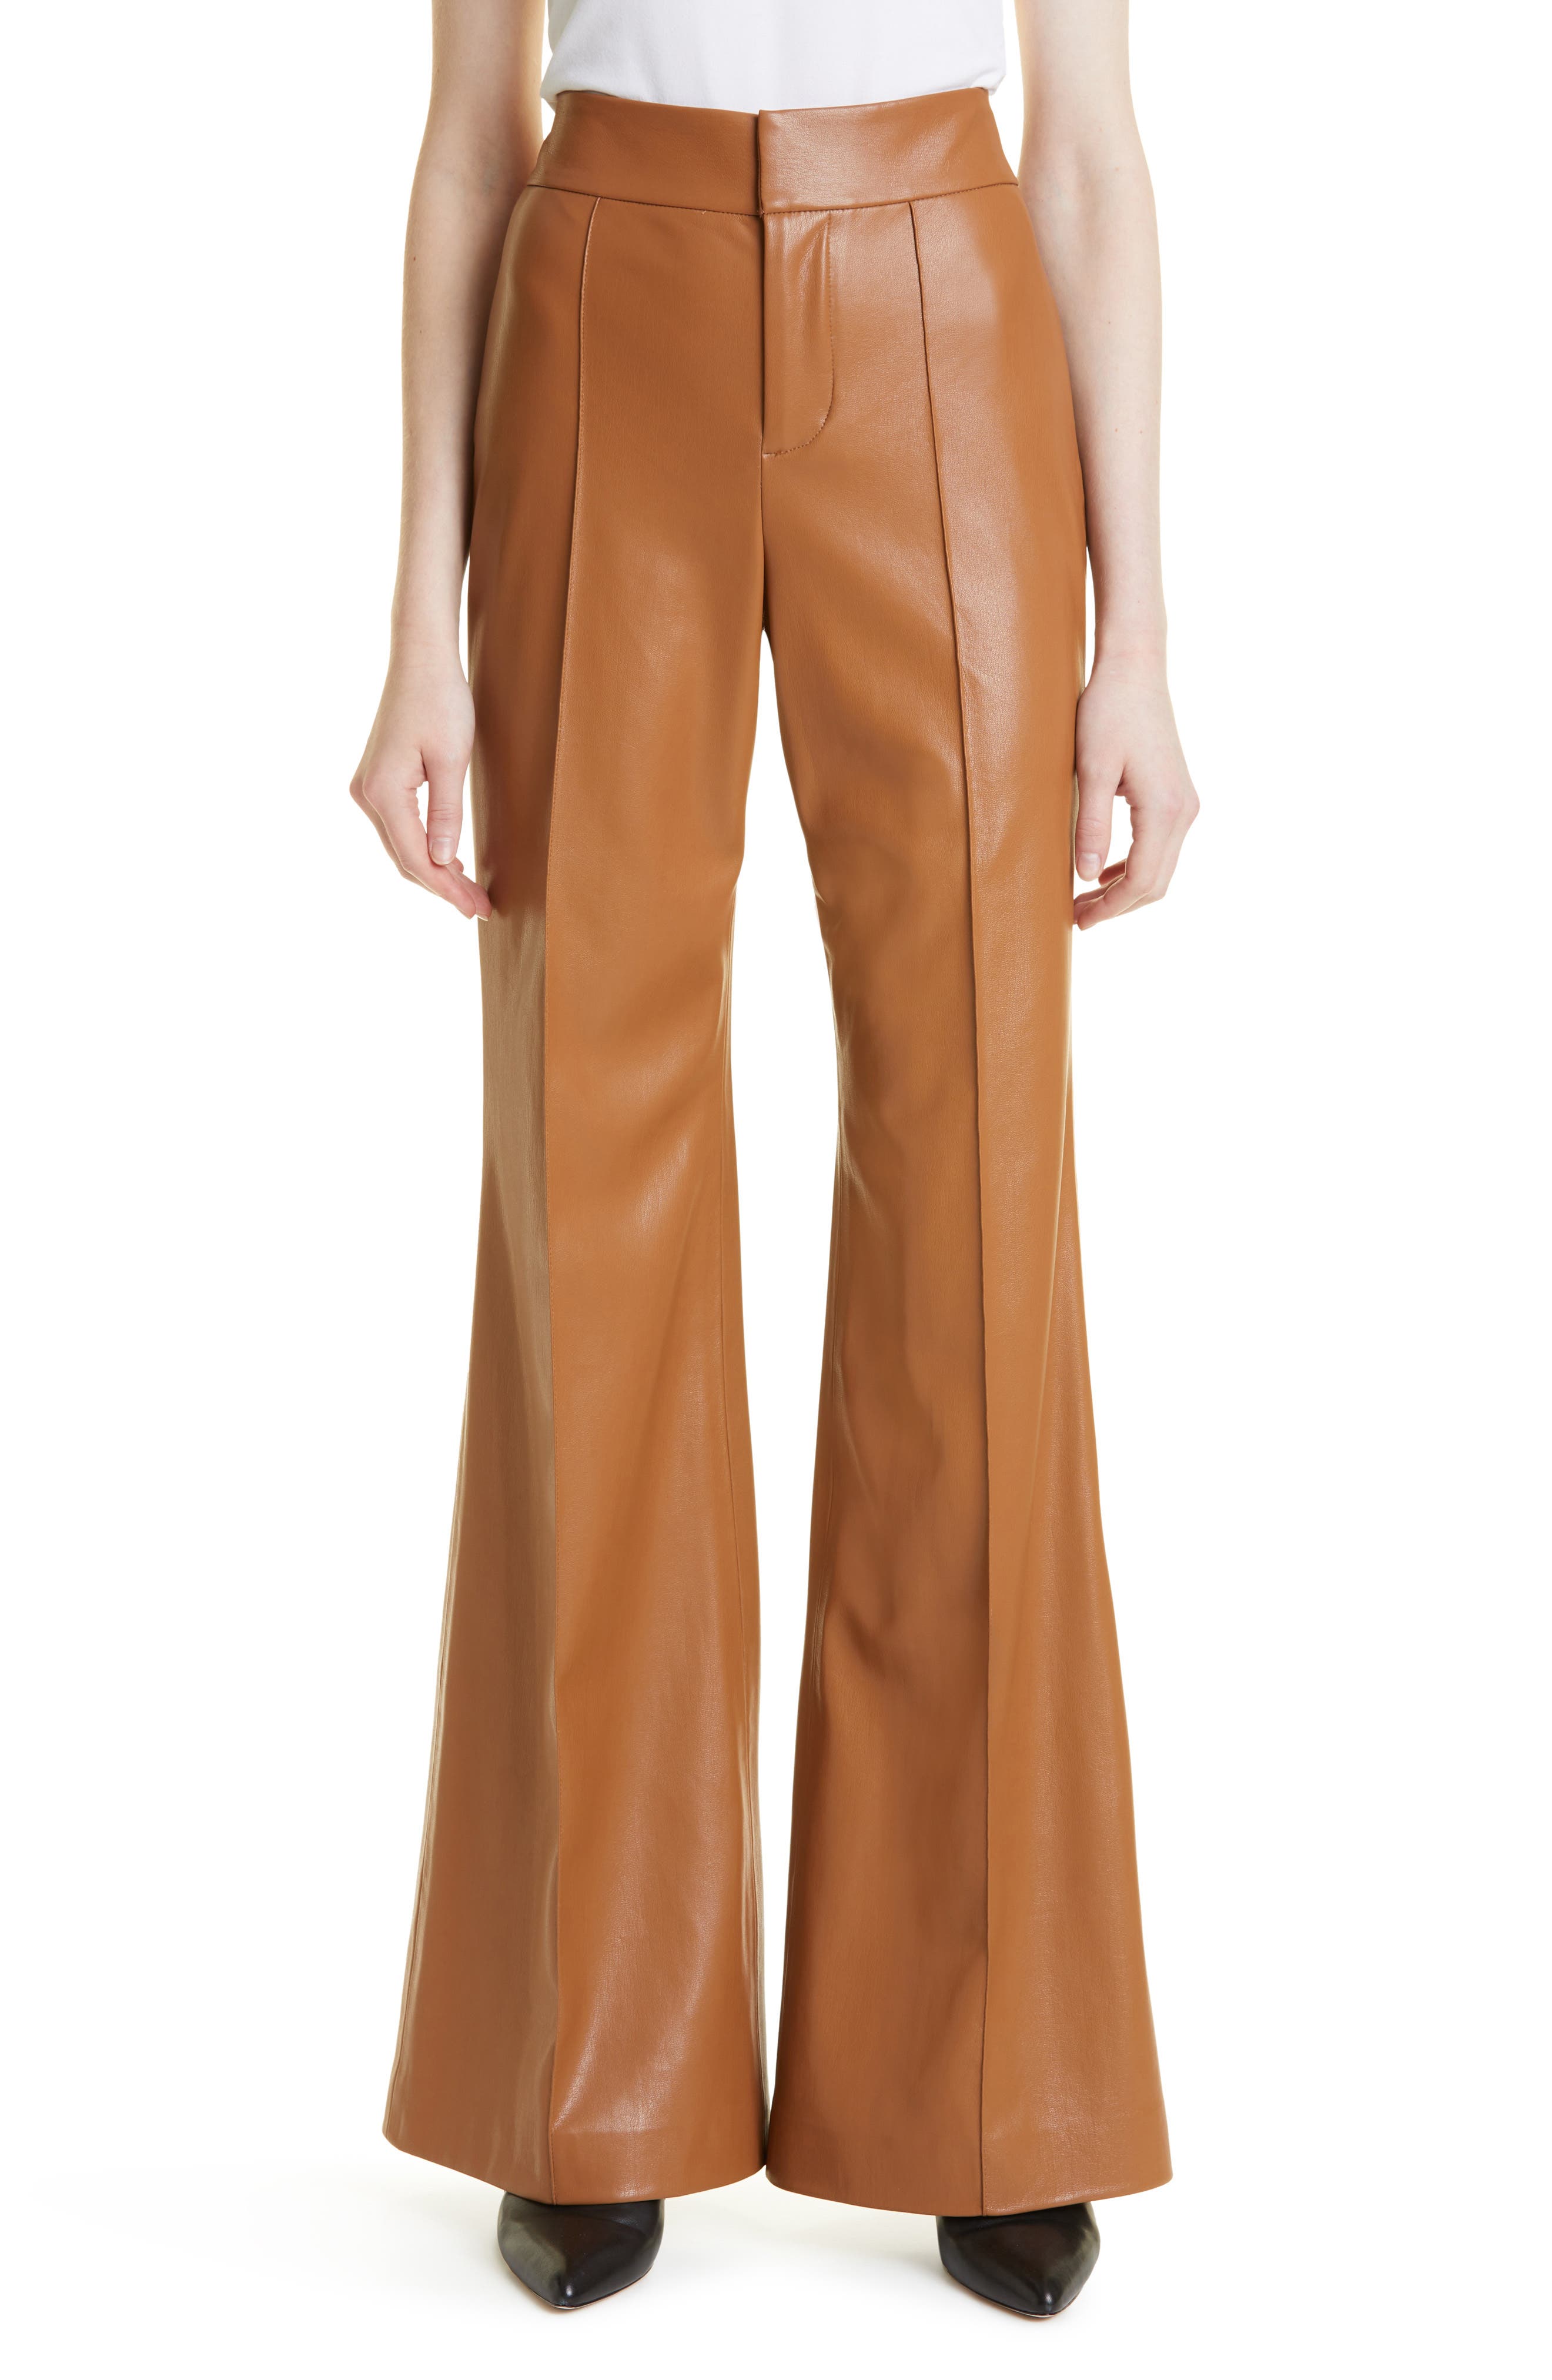 ANDREĀDAMO Brown Convertible Leather Pants